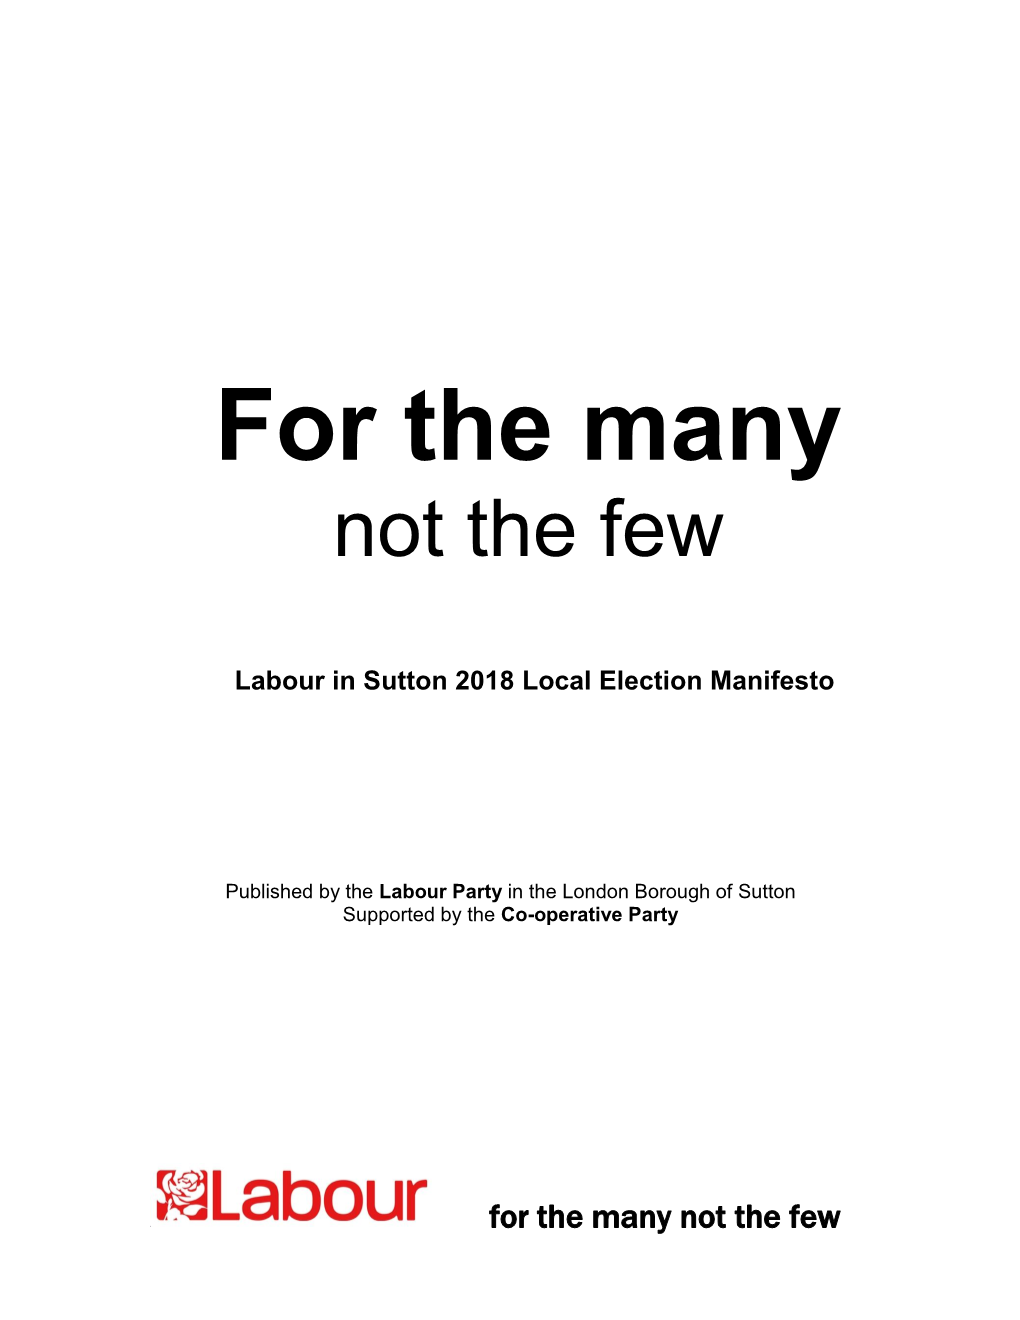 Sutton-Labour-Manifesto-2018.Pdf